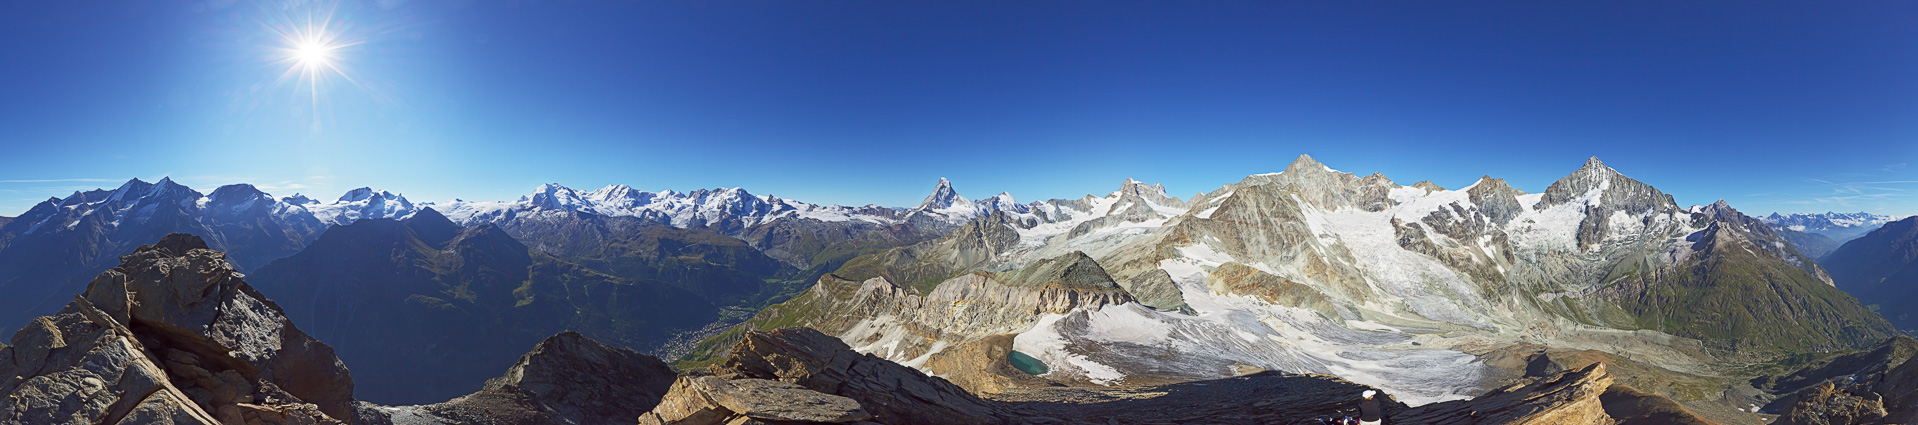 Traumberg oberhalb Zermatt mit traumhaftem Panorama.